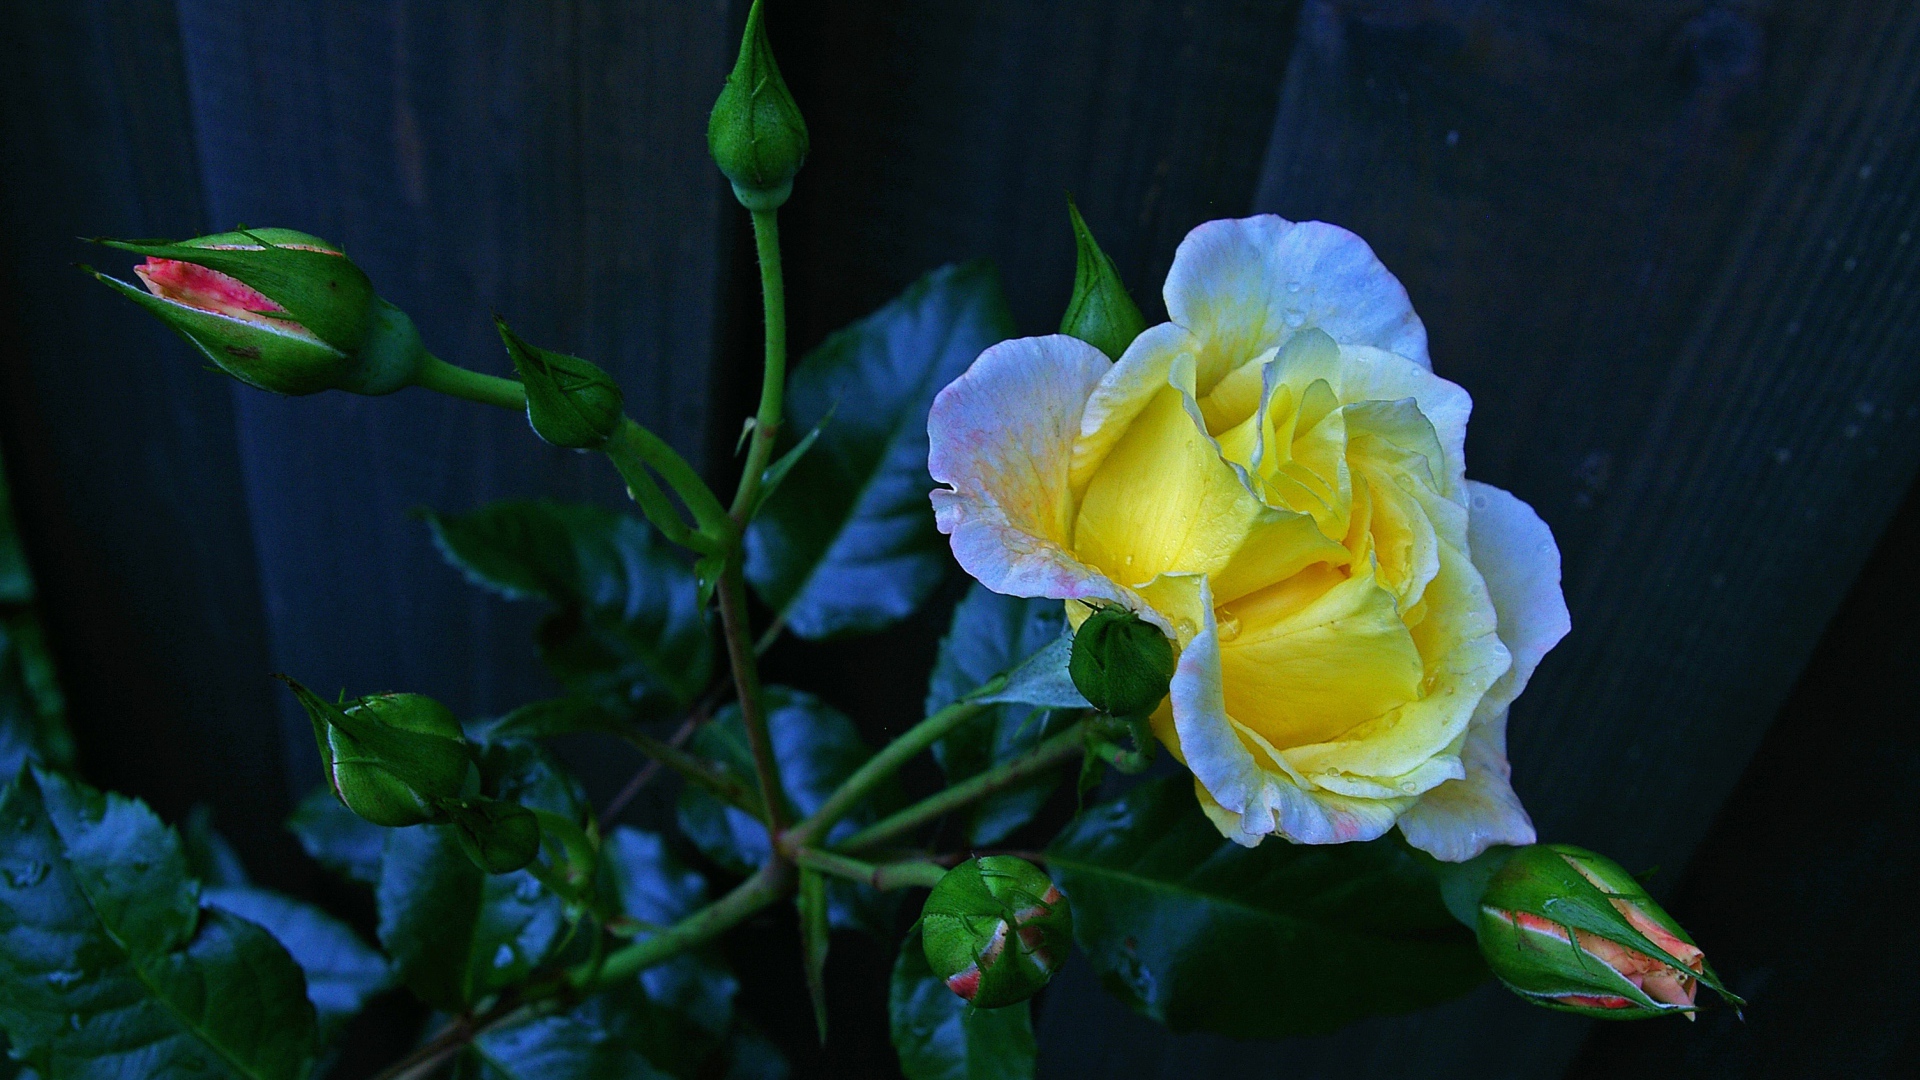 Красивая желтая роза с бутонами у забора 